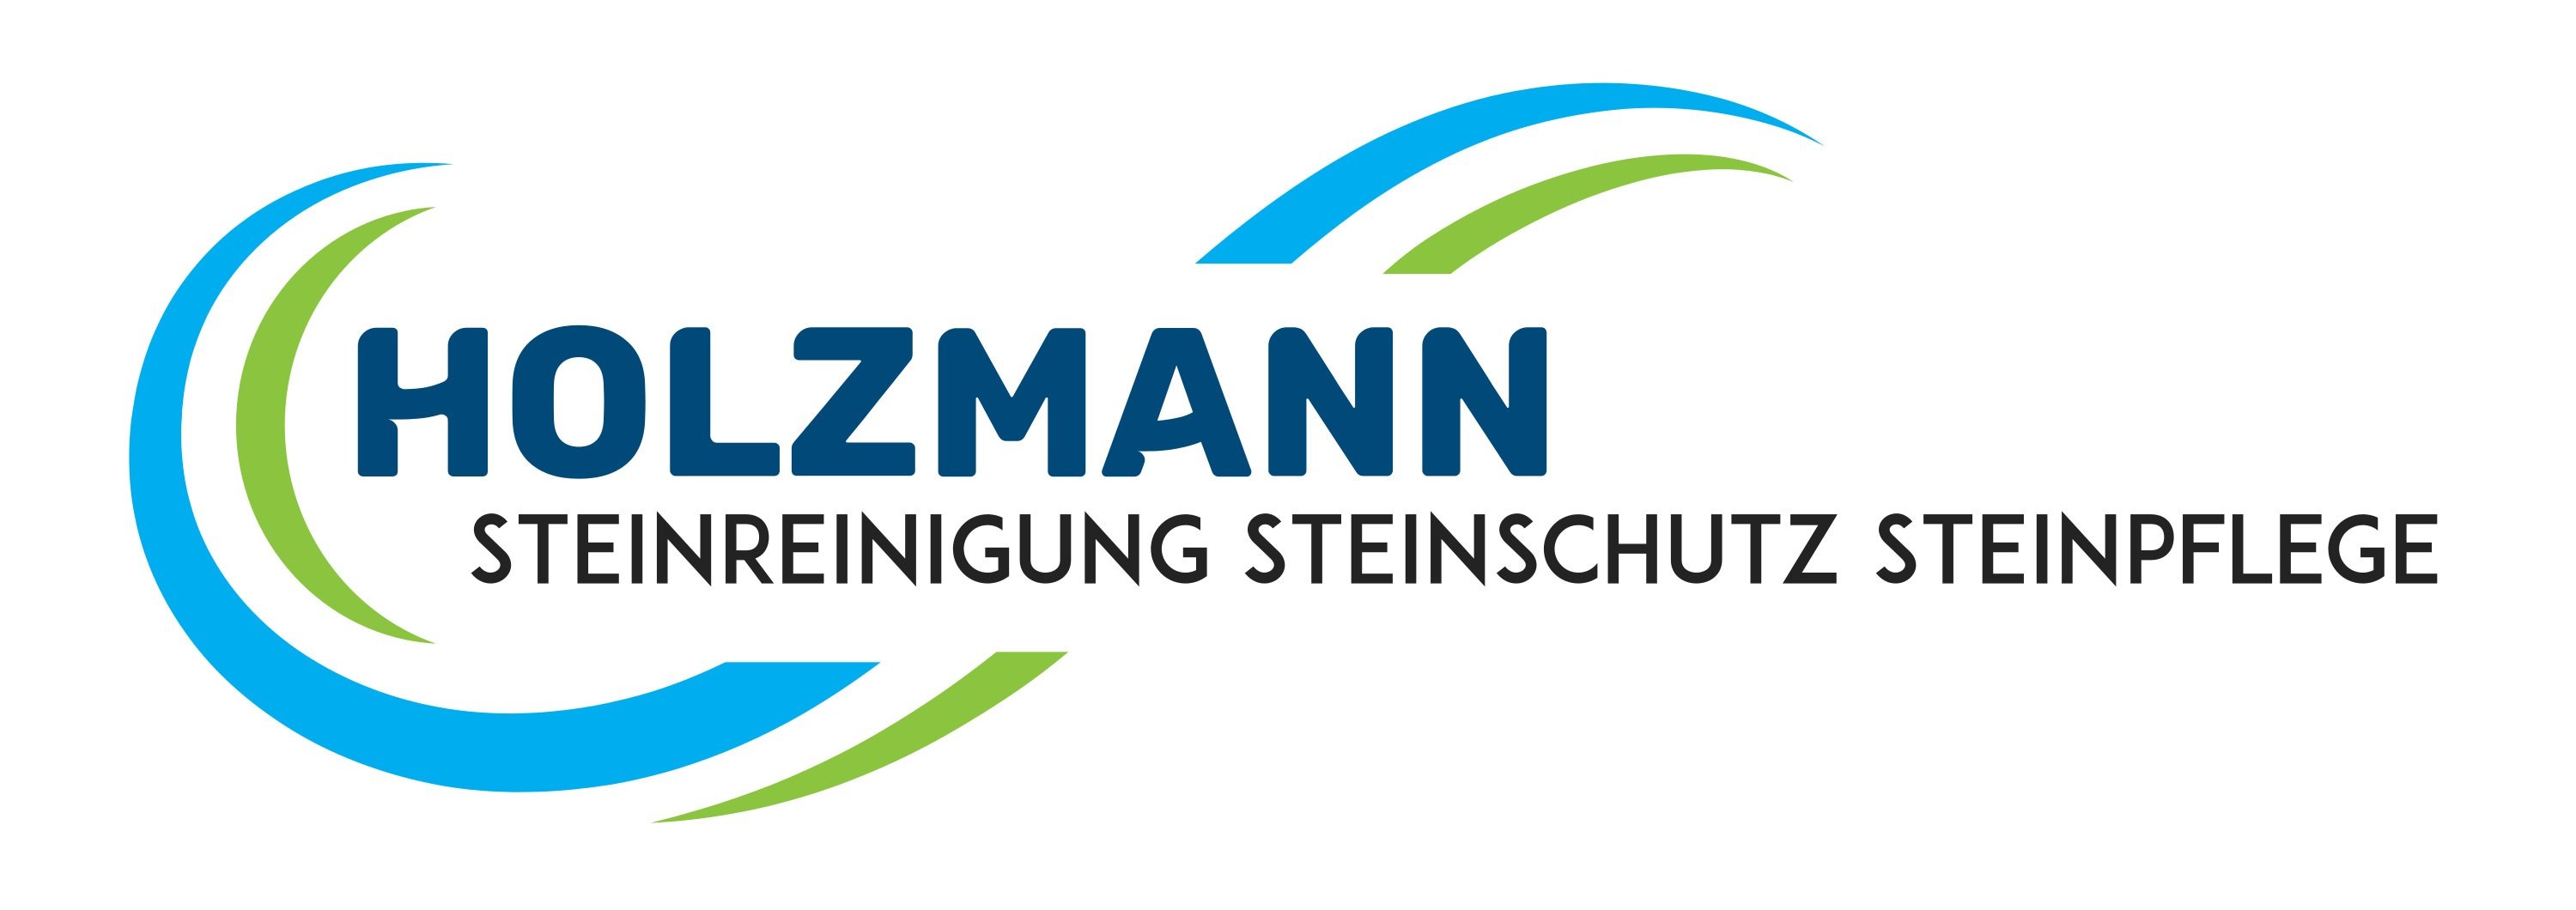 Steinpflege Holzmann